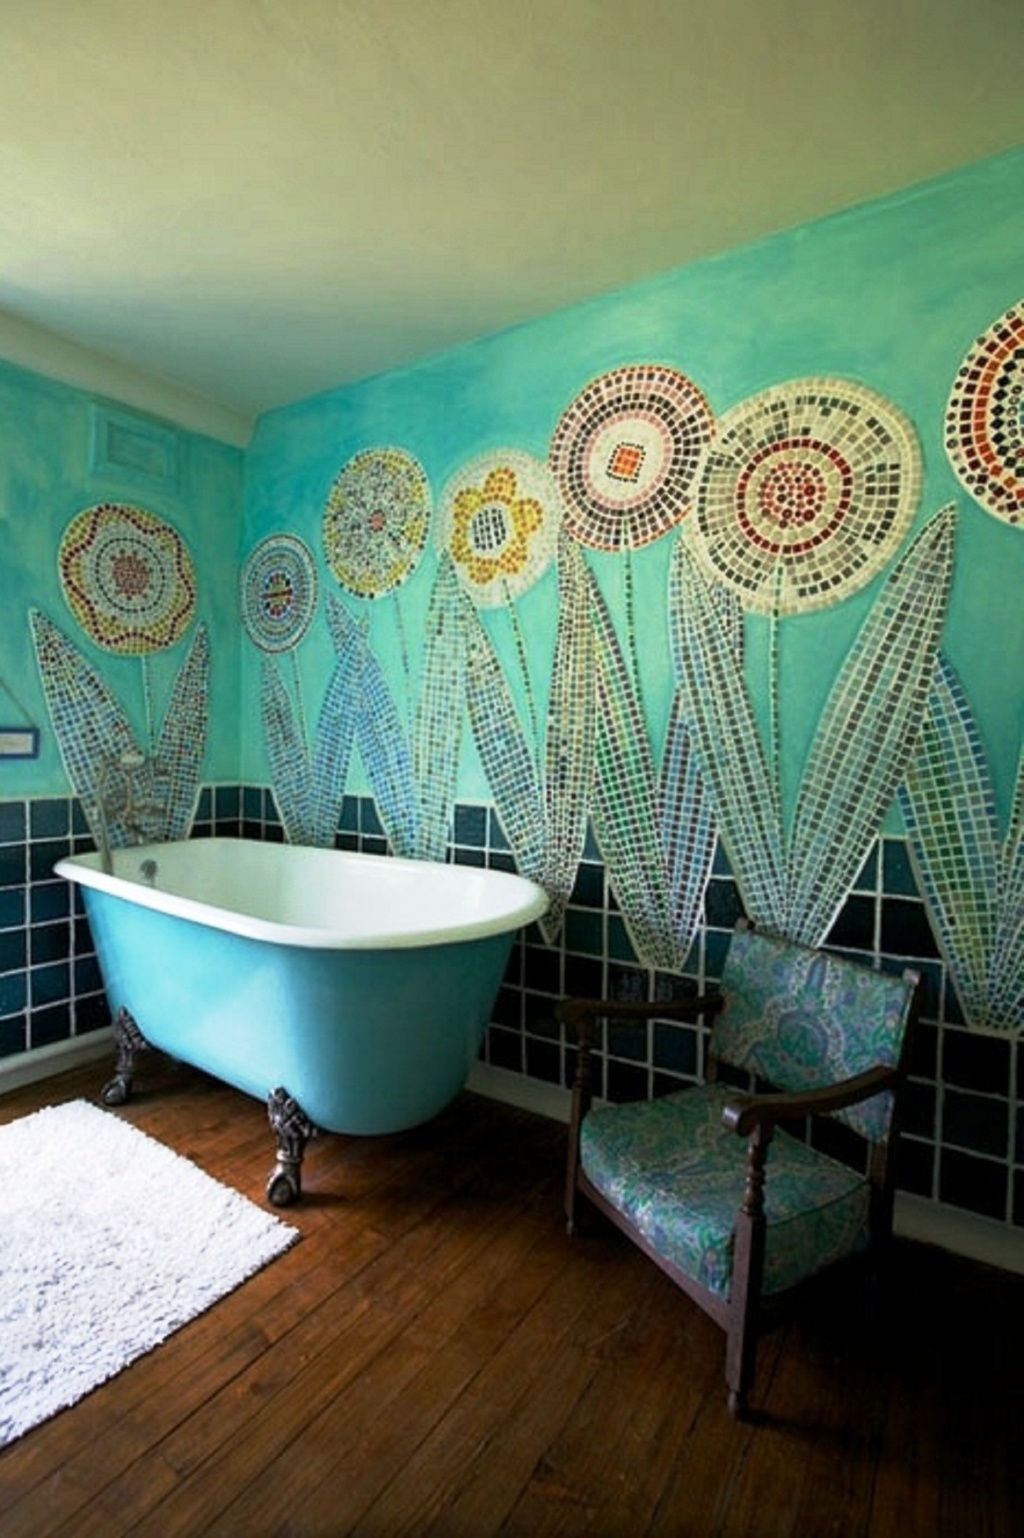 Excellent turquoise bathroom